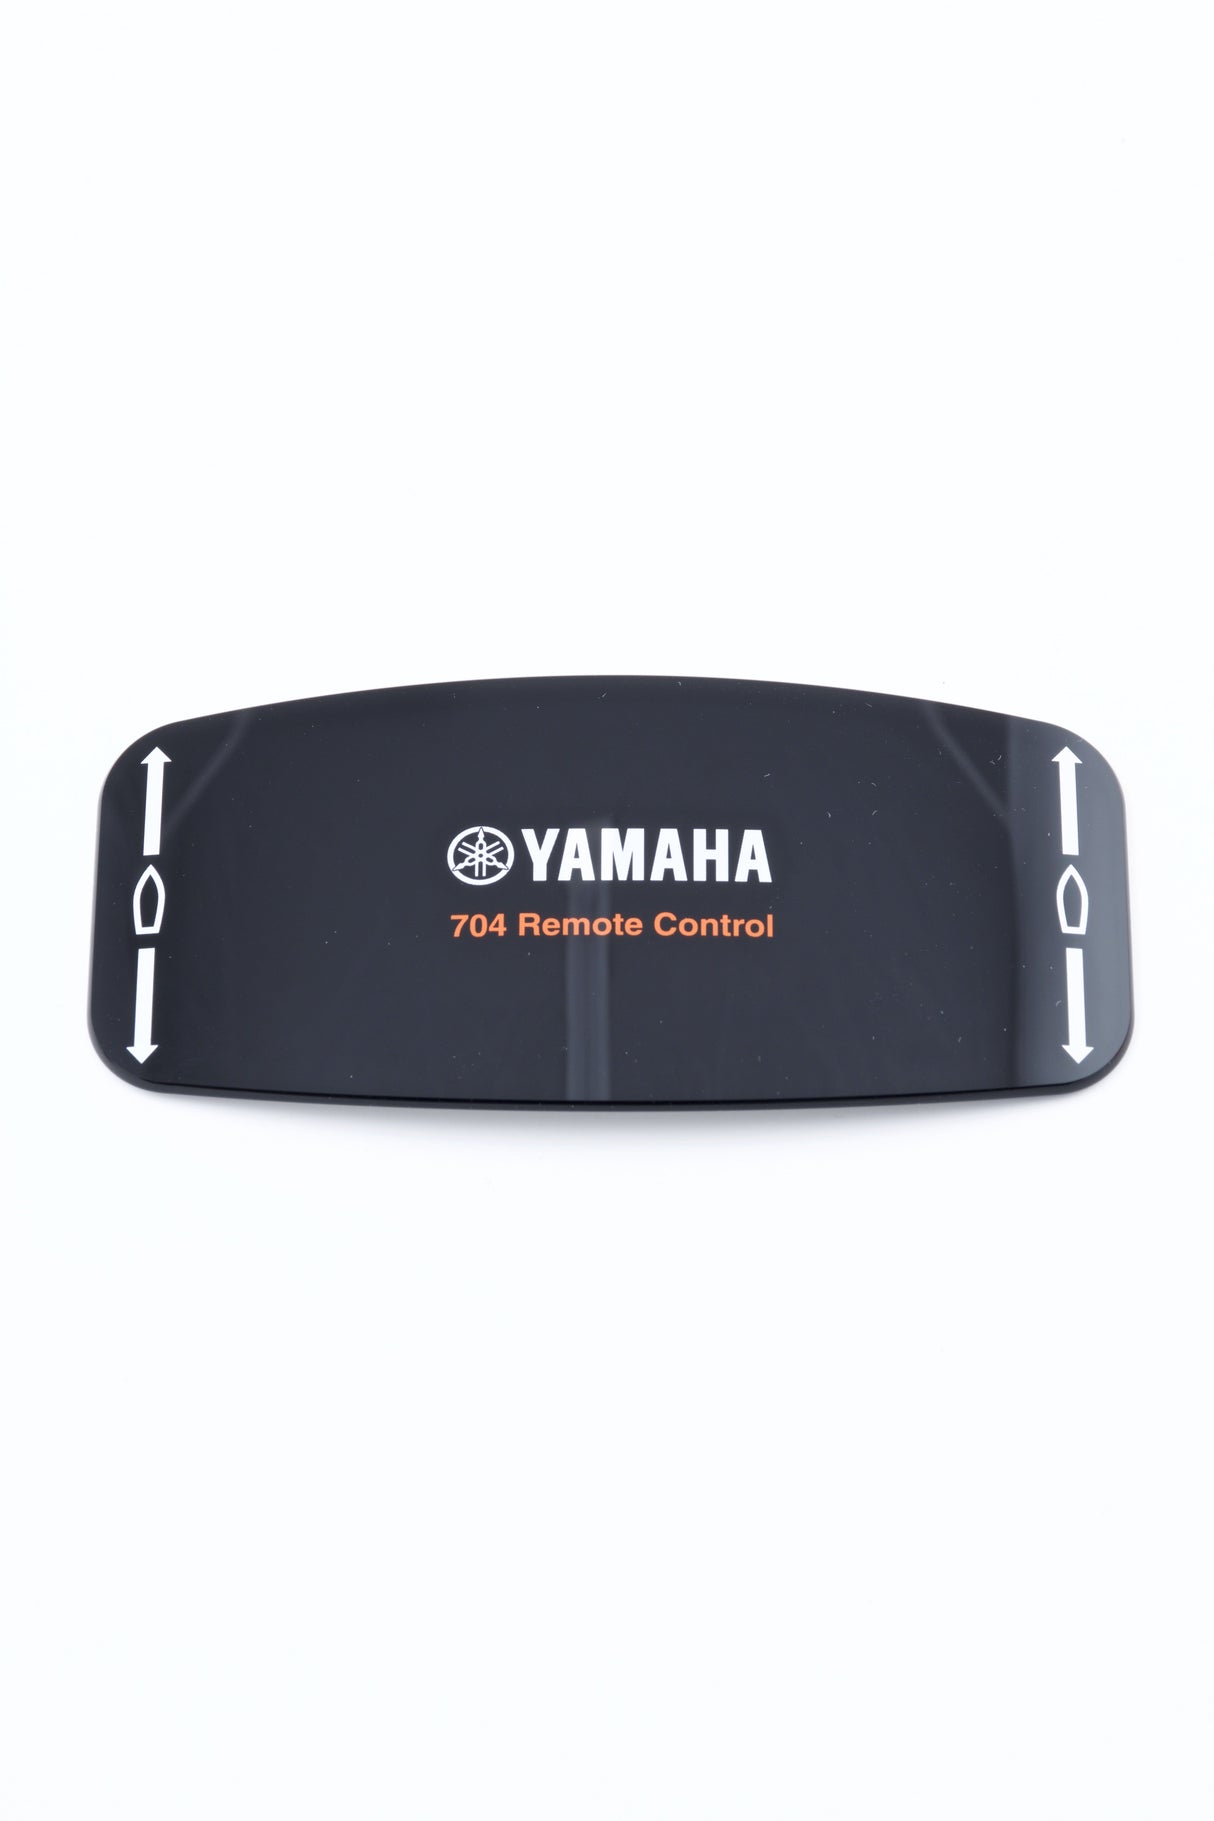 Yamaha - Graphic - 704-48215-30-00